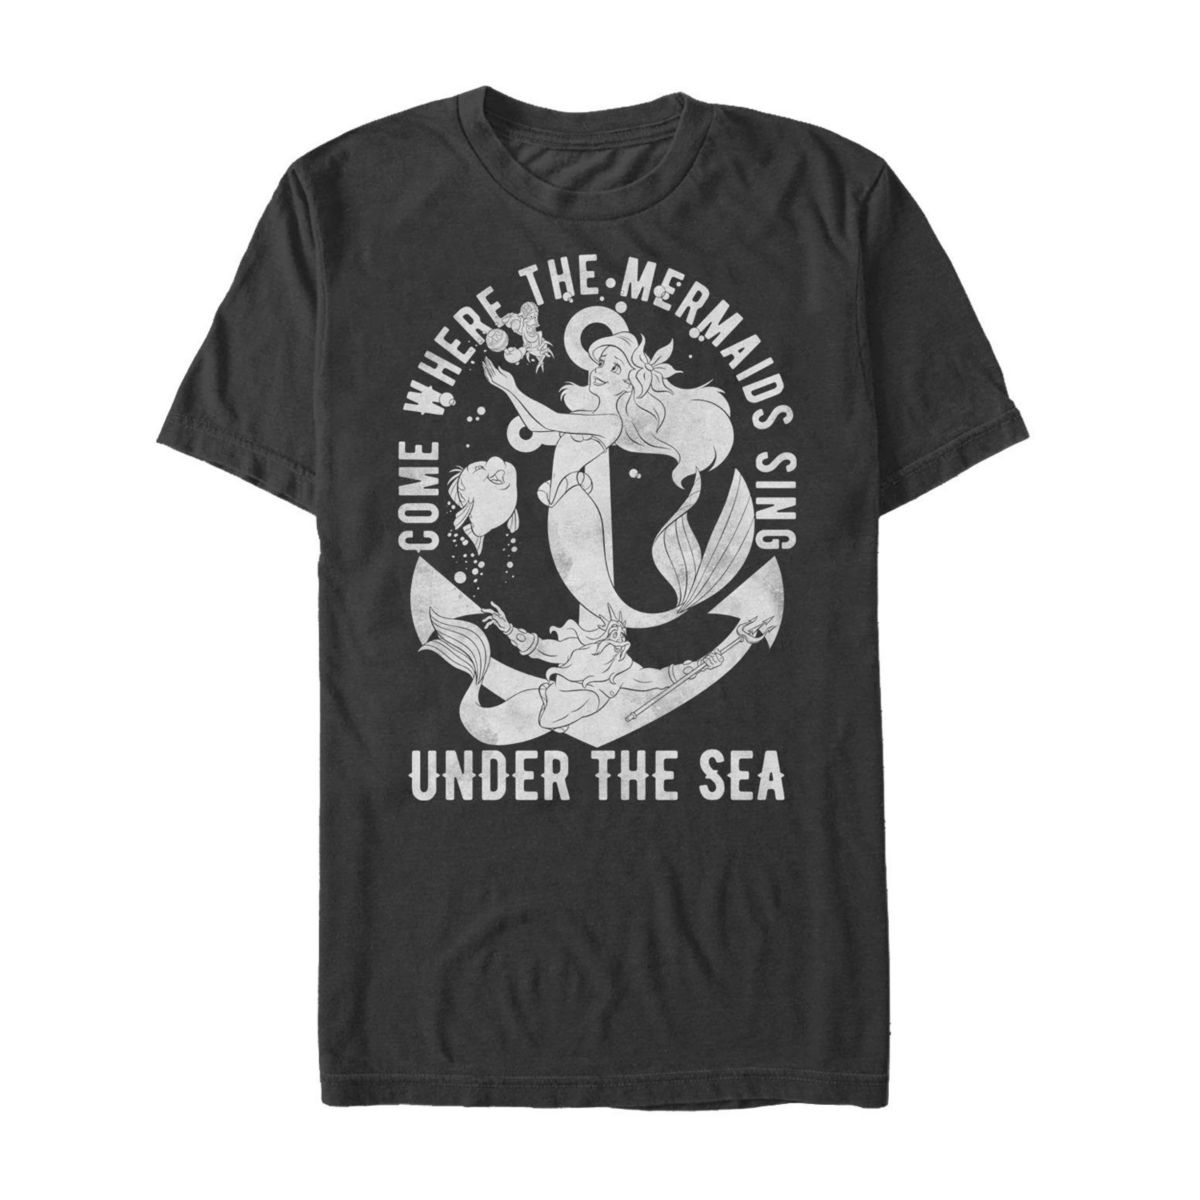 Купить Футболки Мужская футболка Disneys The Little Mermaid в стиле русалочки Licensed